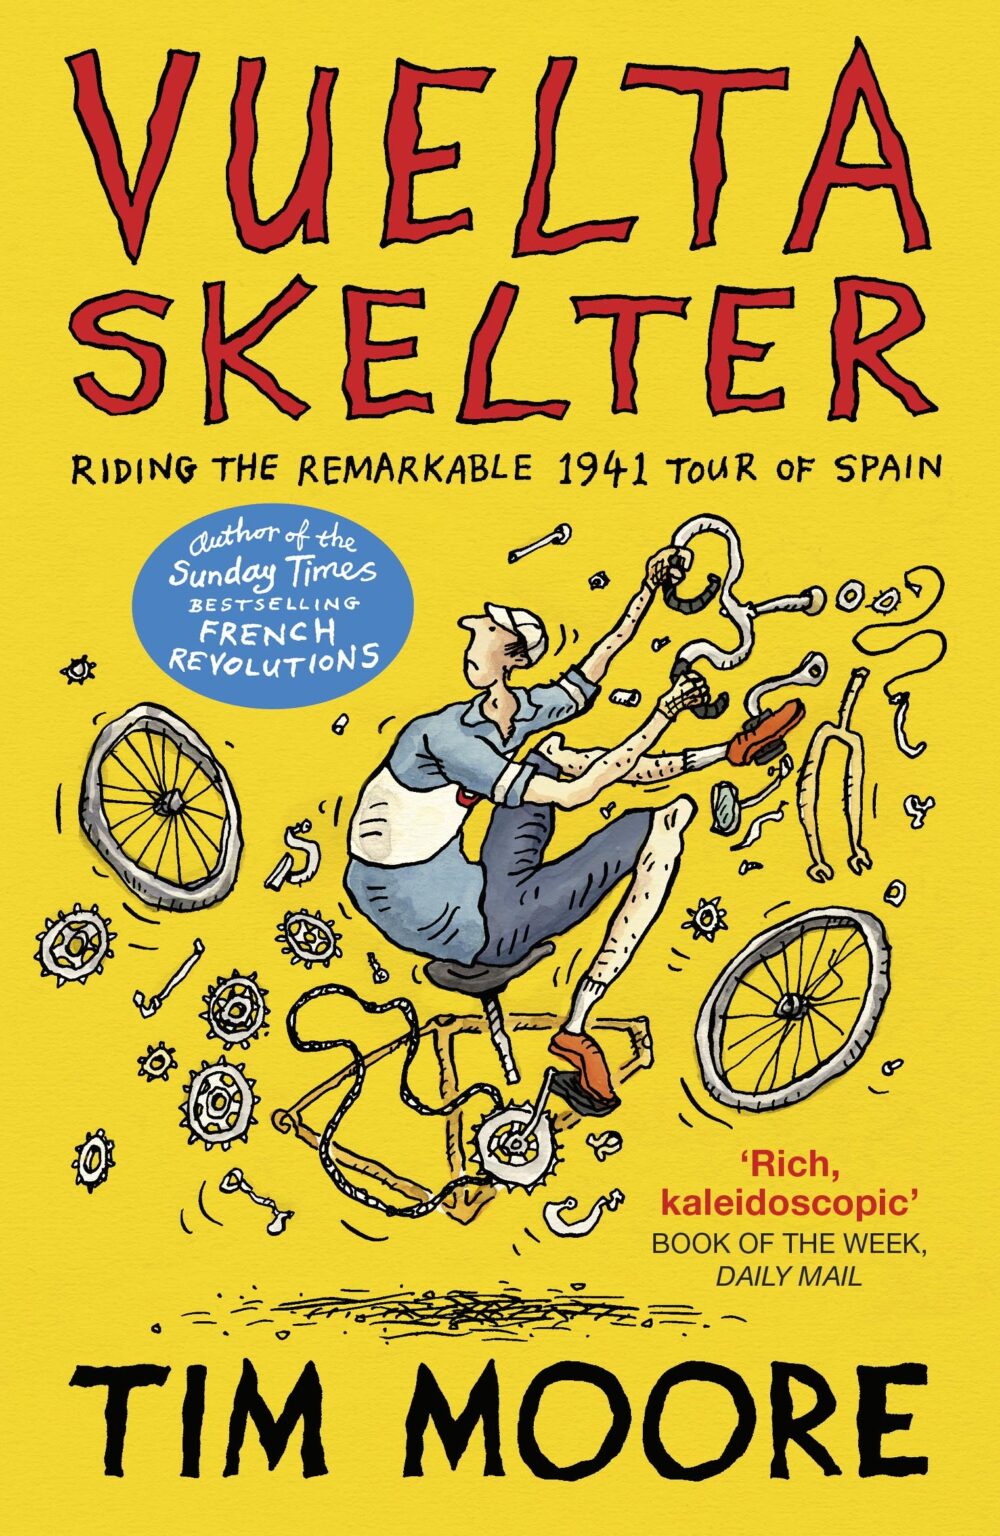 Vuelta Skelter by Tim Moore